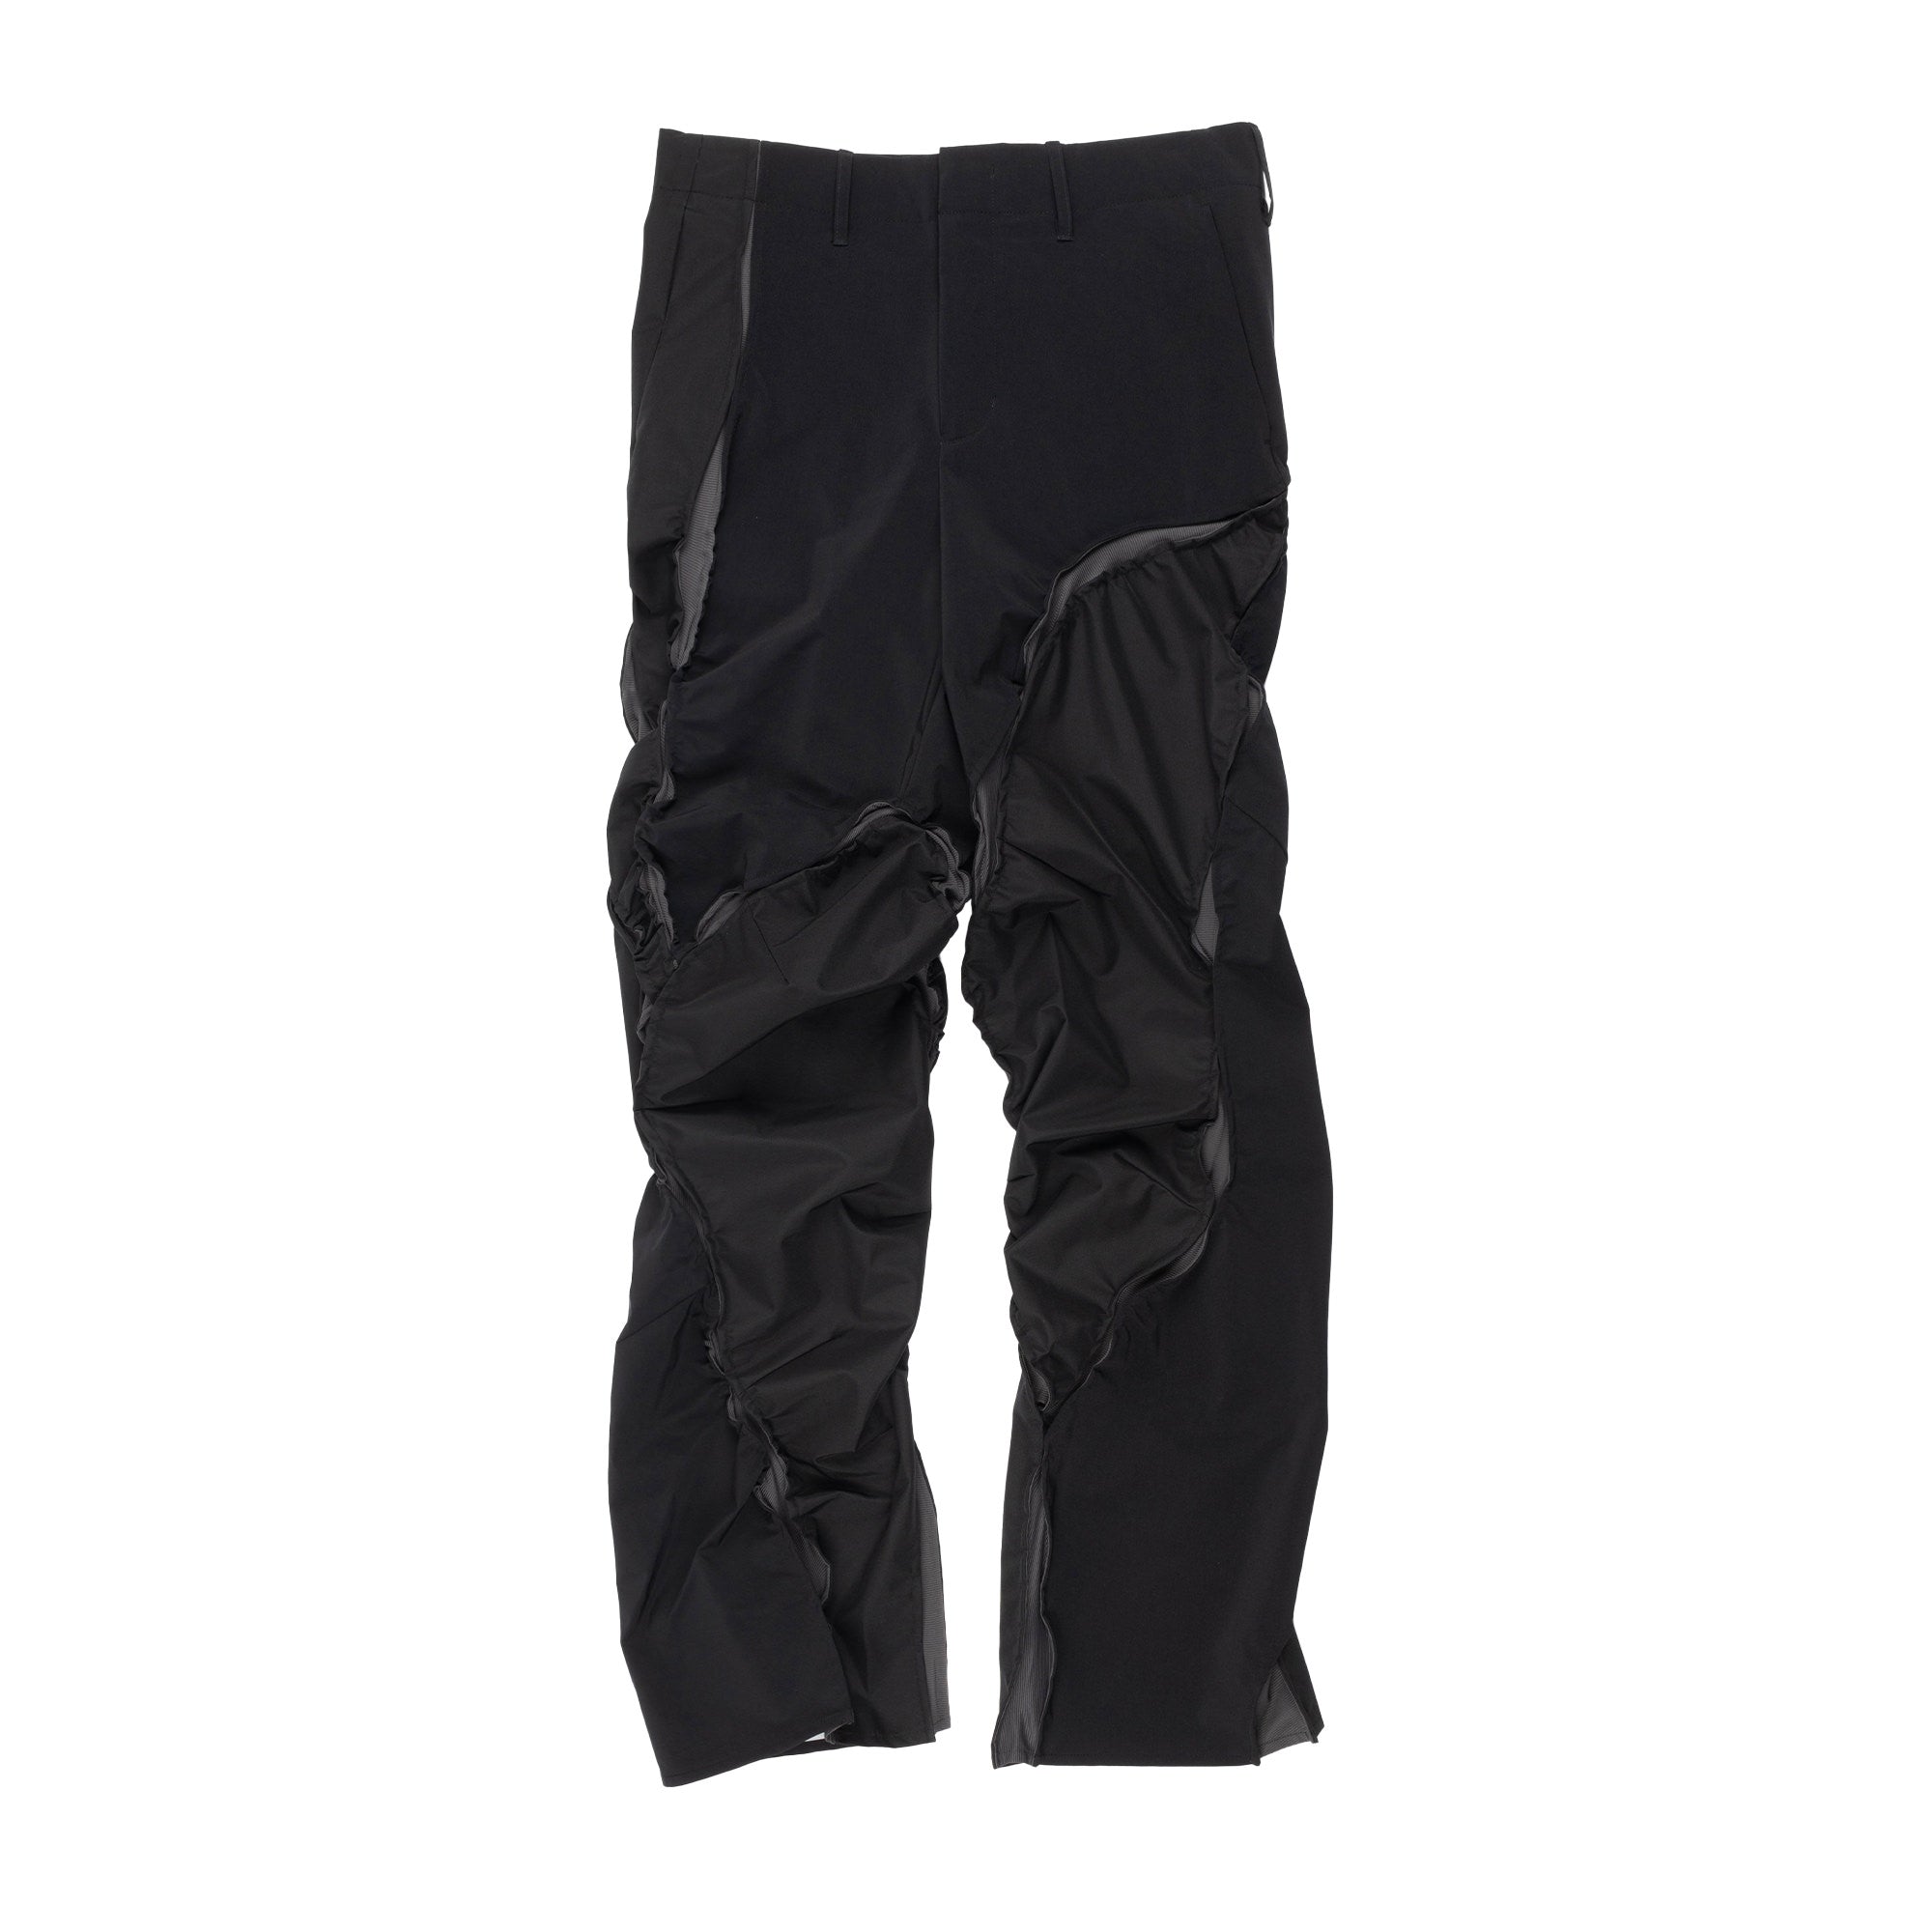 NWT Xersion Boot Cut quick dri Yoga Pants Black Large-XLarge T cotton blend